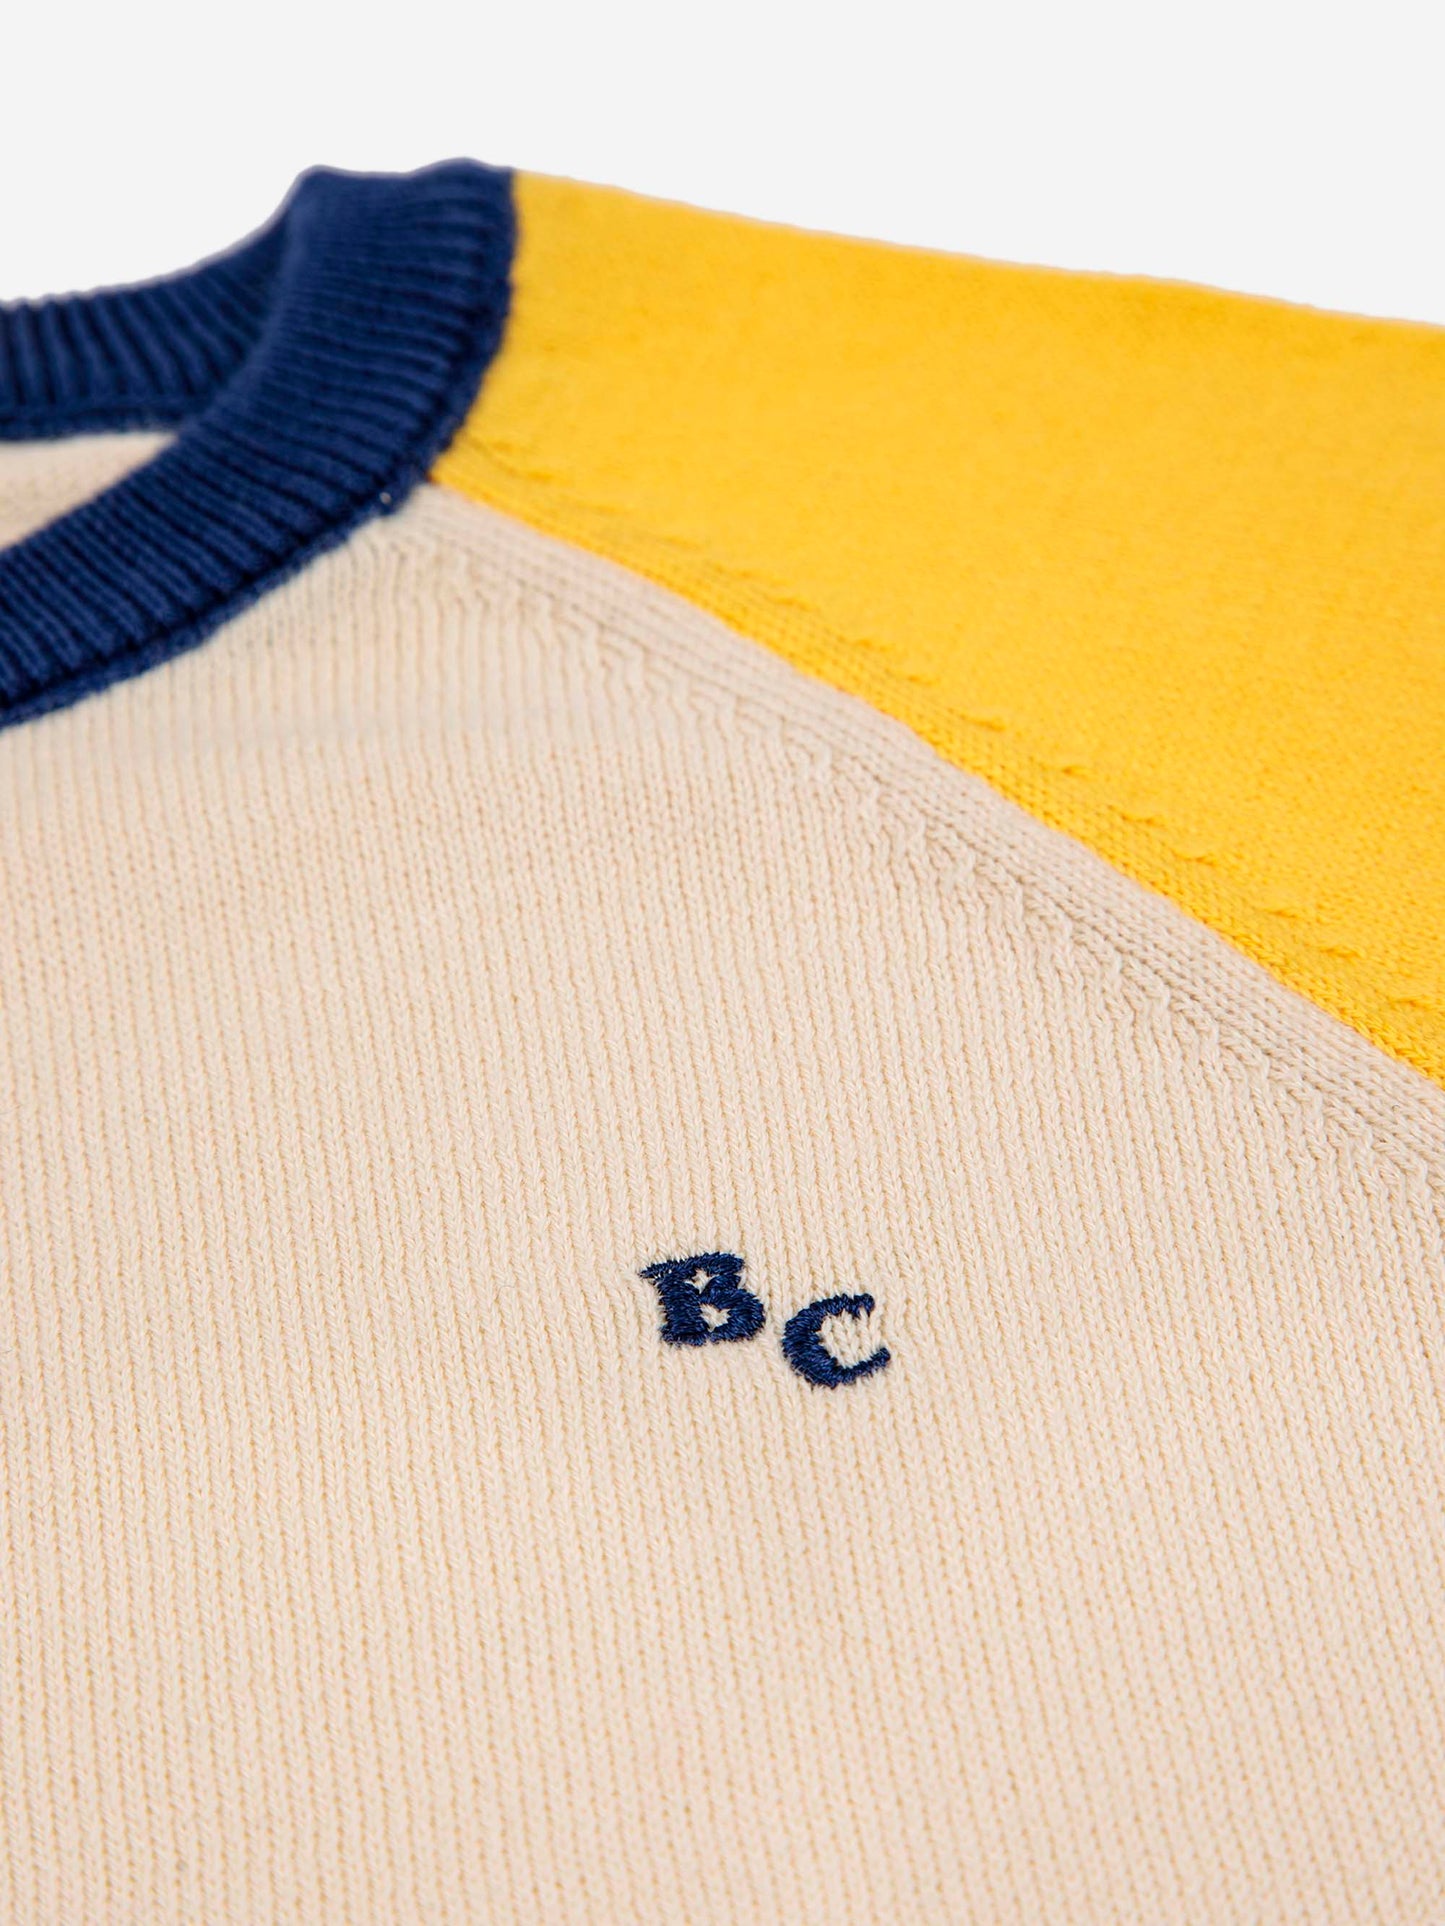 B.C Sail Rope Knitted T-Shirt